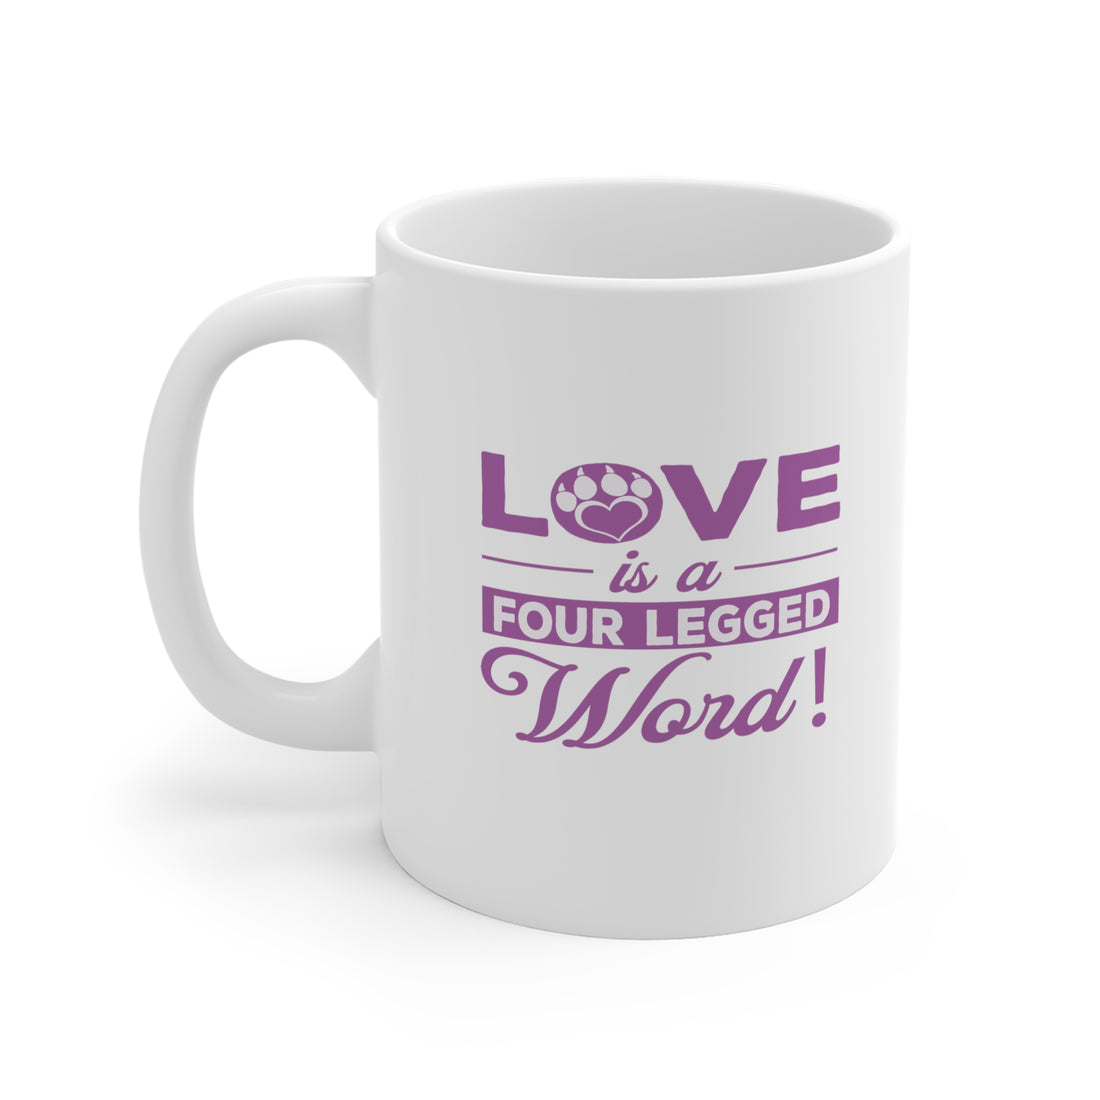 Love Is A Four Legged Word - White Ceramic Mug 2 sizes Available